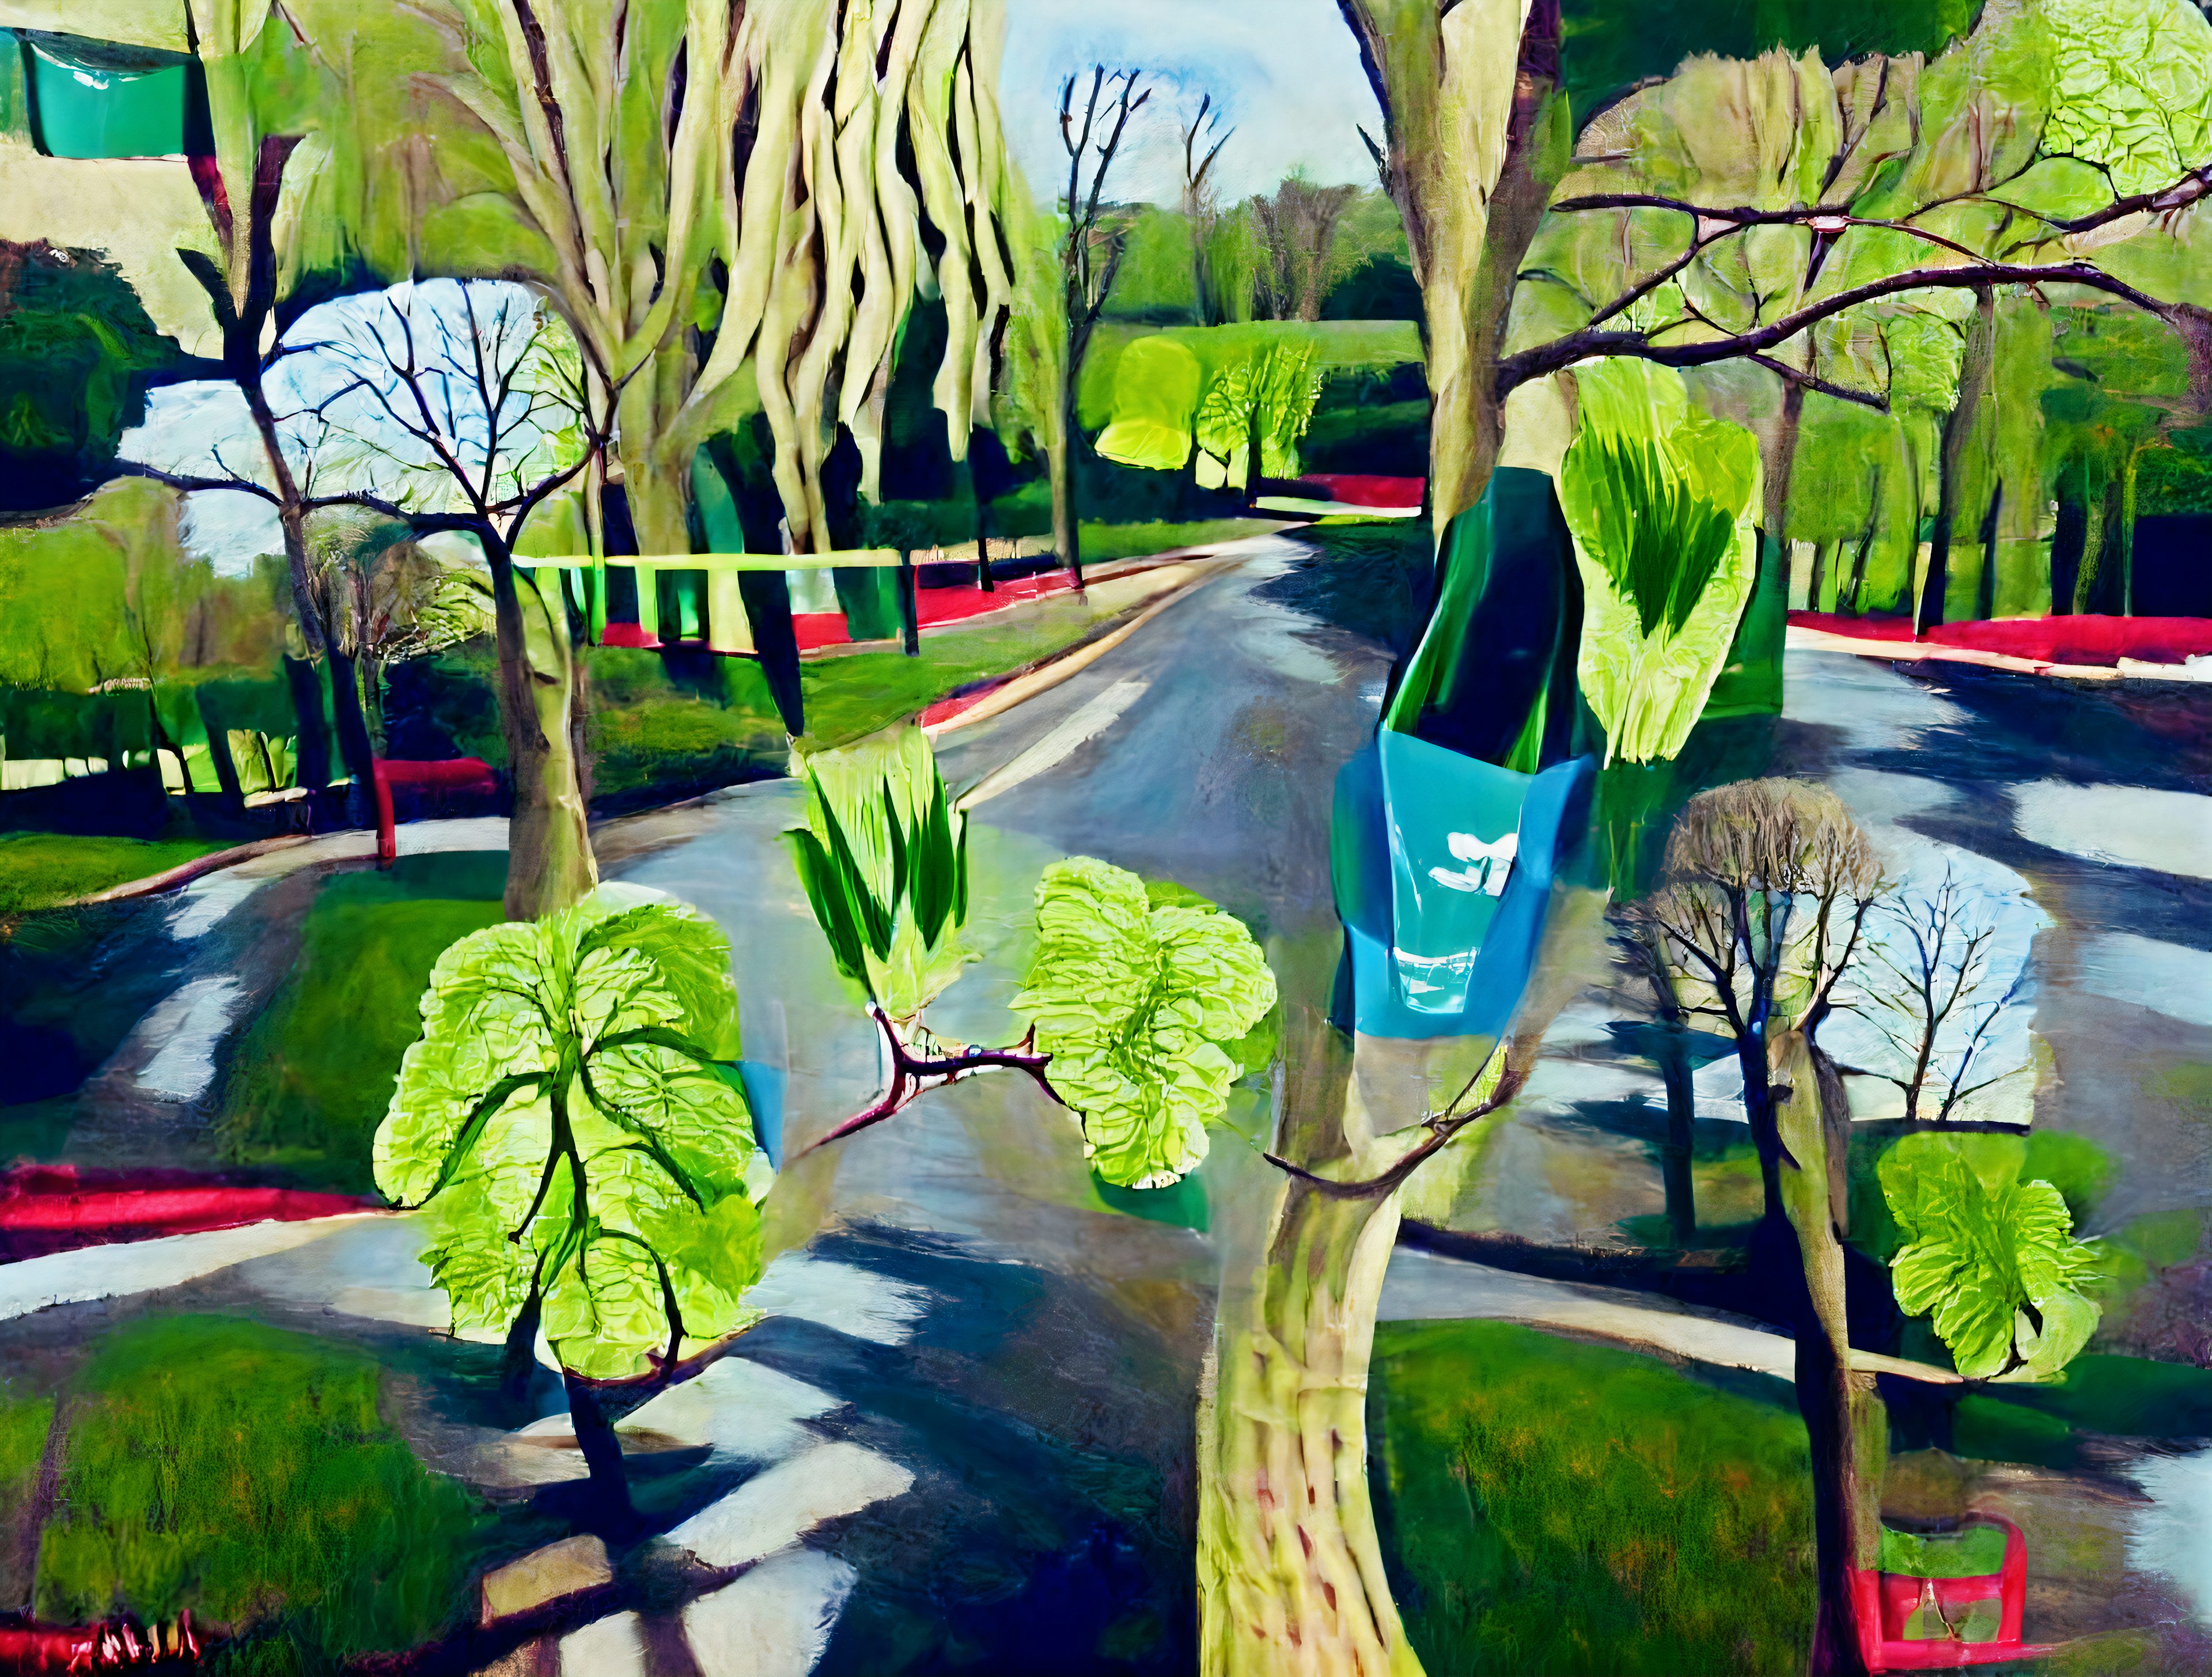 Peter Pink-Howitt, 'The trees", algo-art, 2021 CE